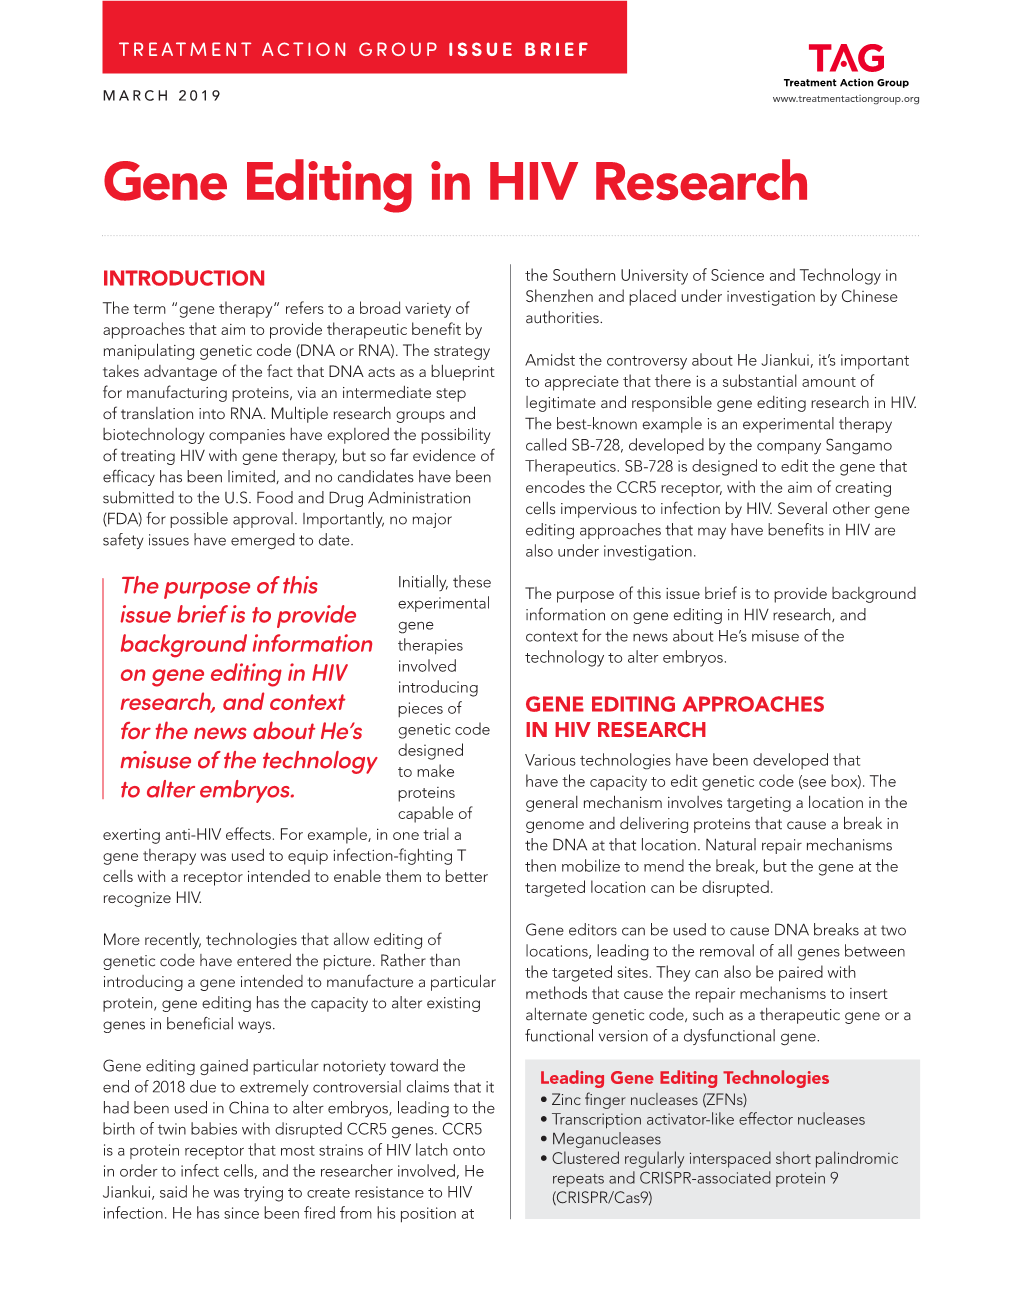 Gene Editing in HIV Research